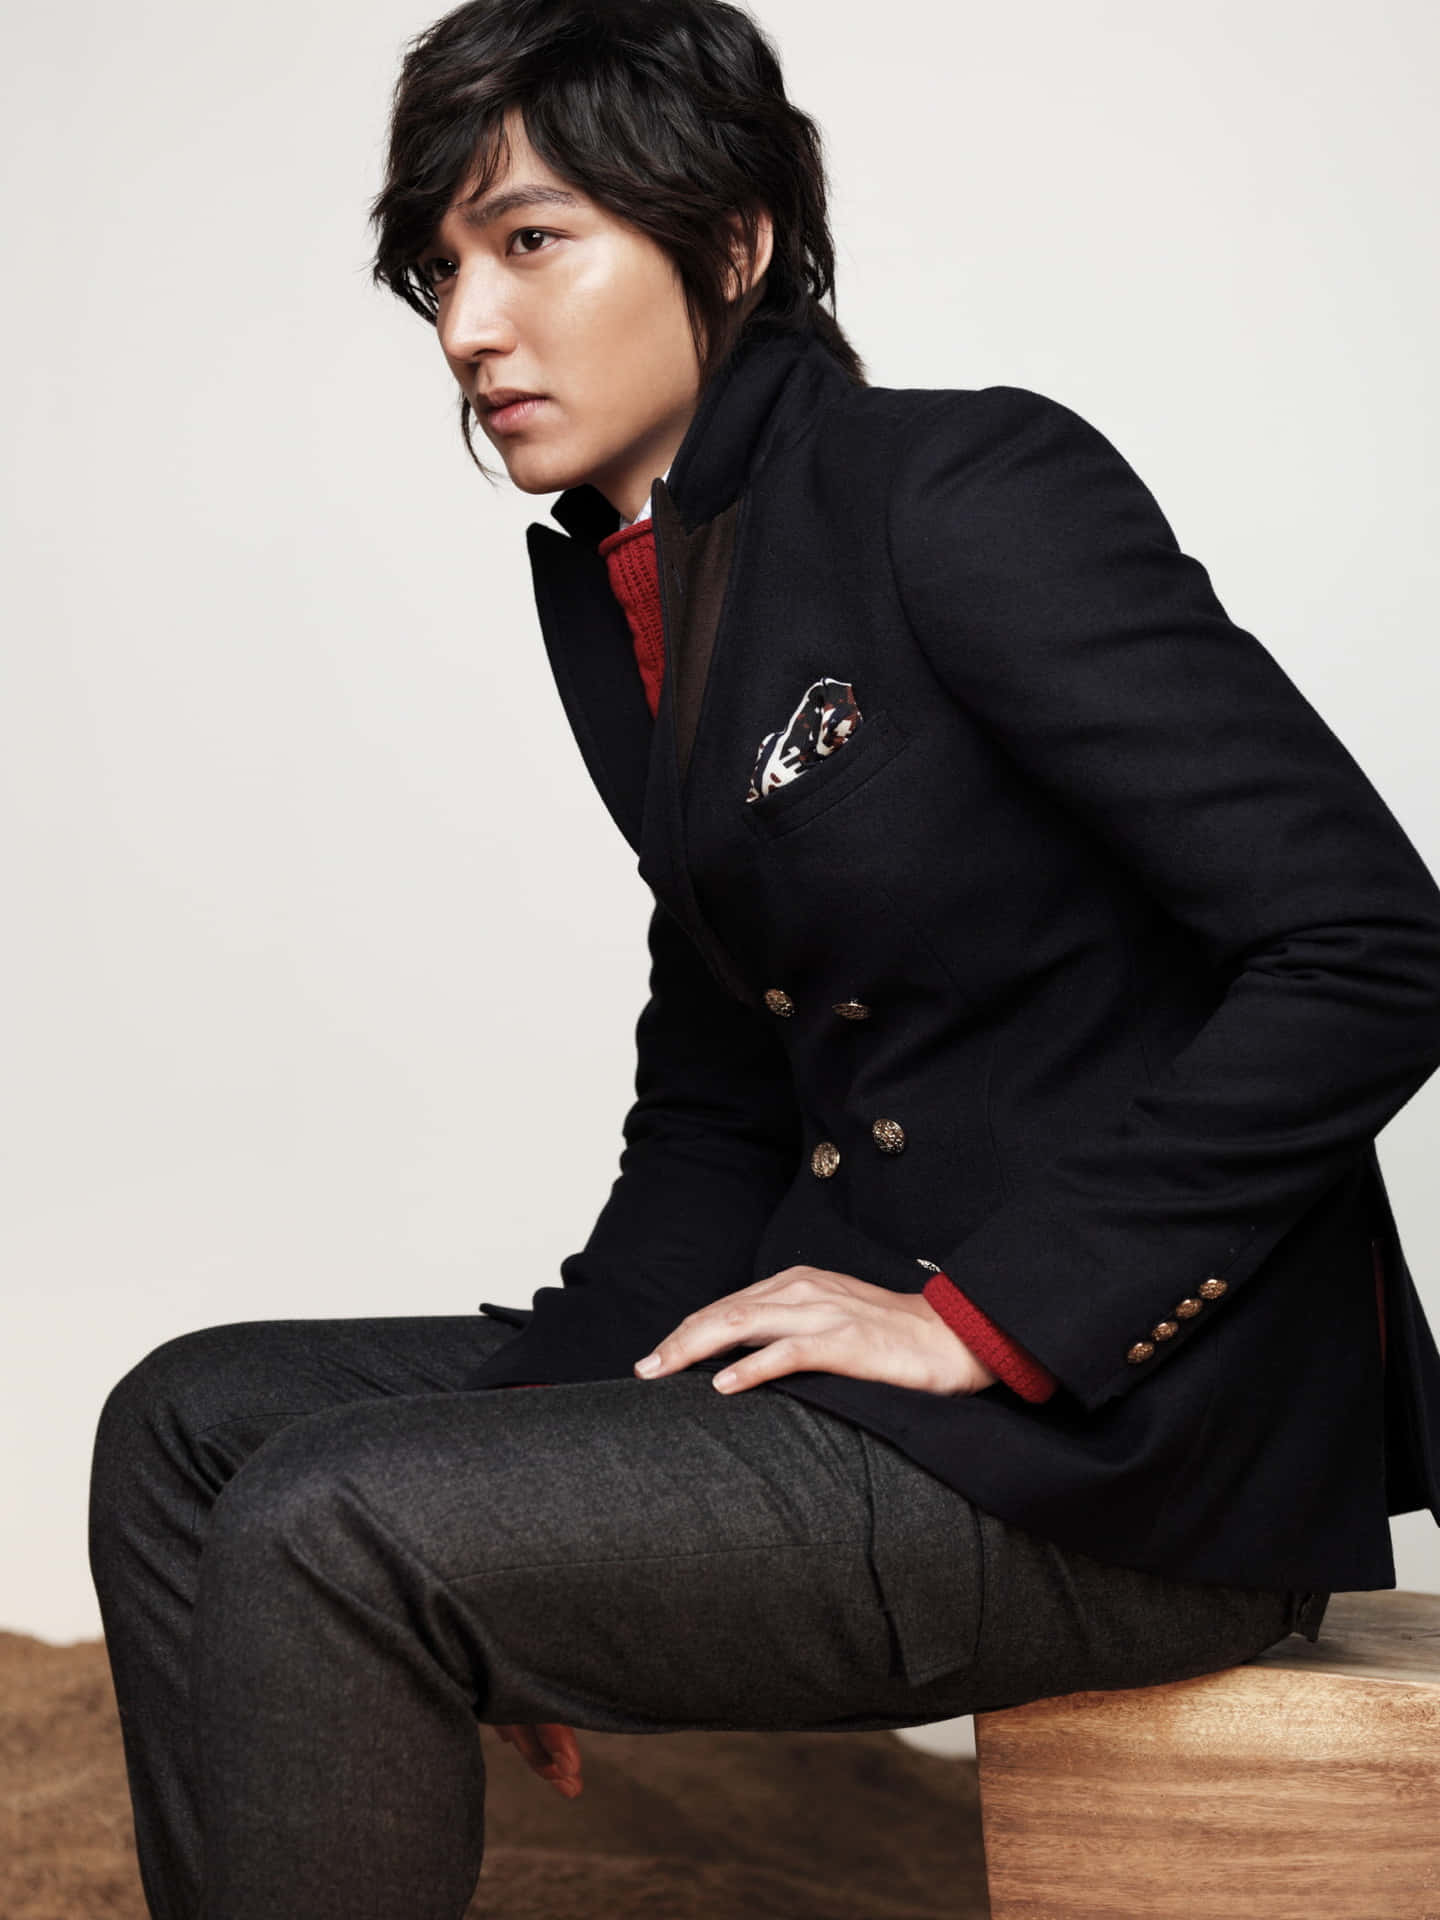 Lee Min Ho Men's Fashion